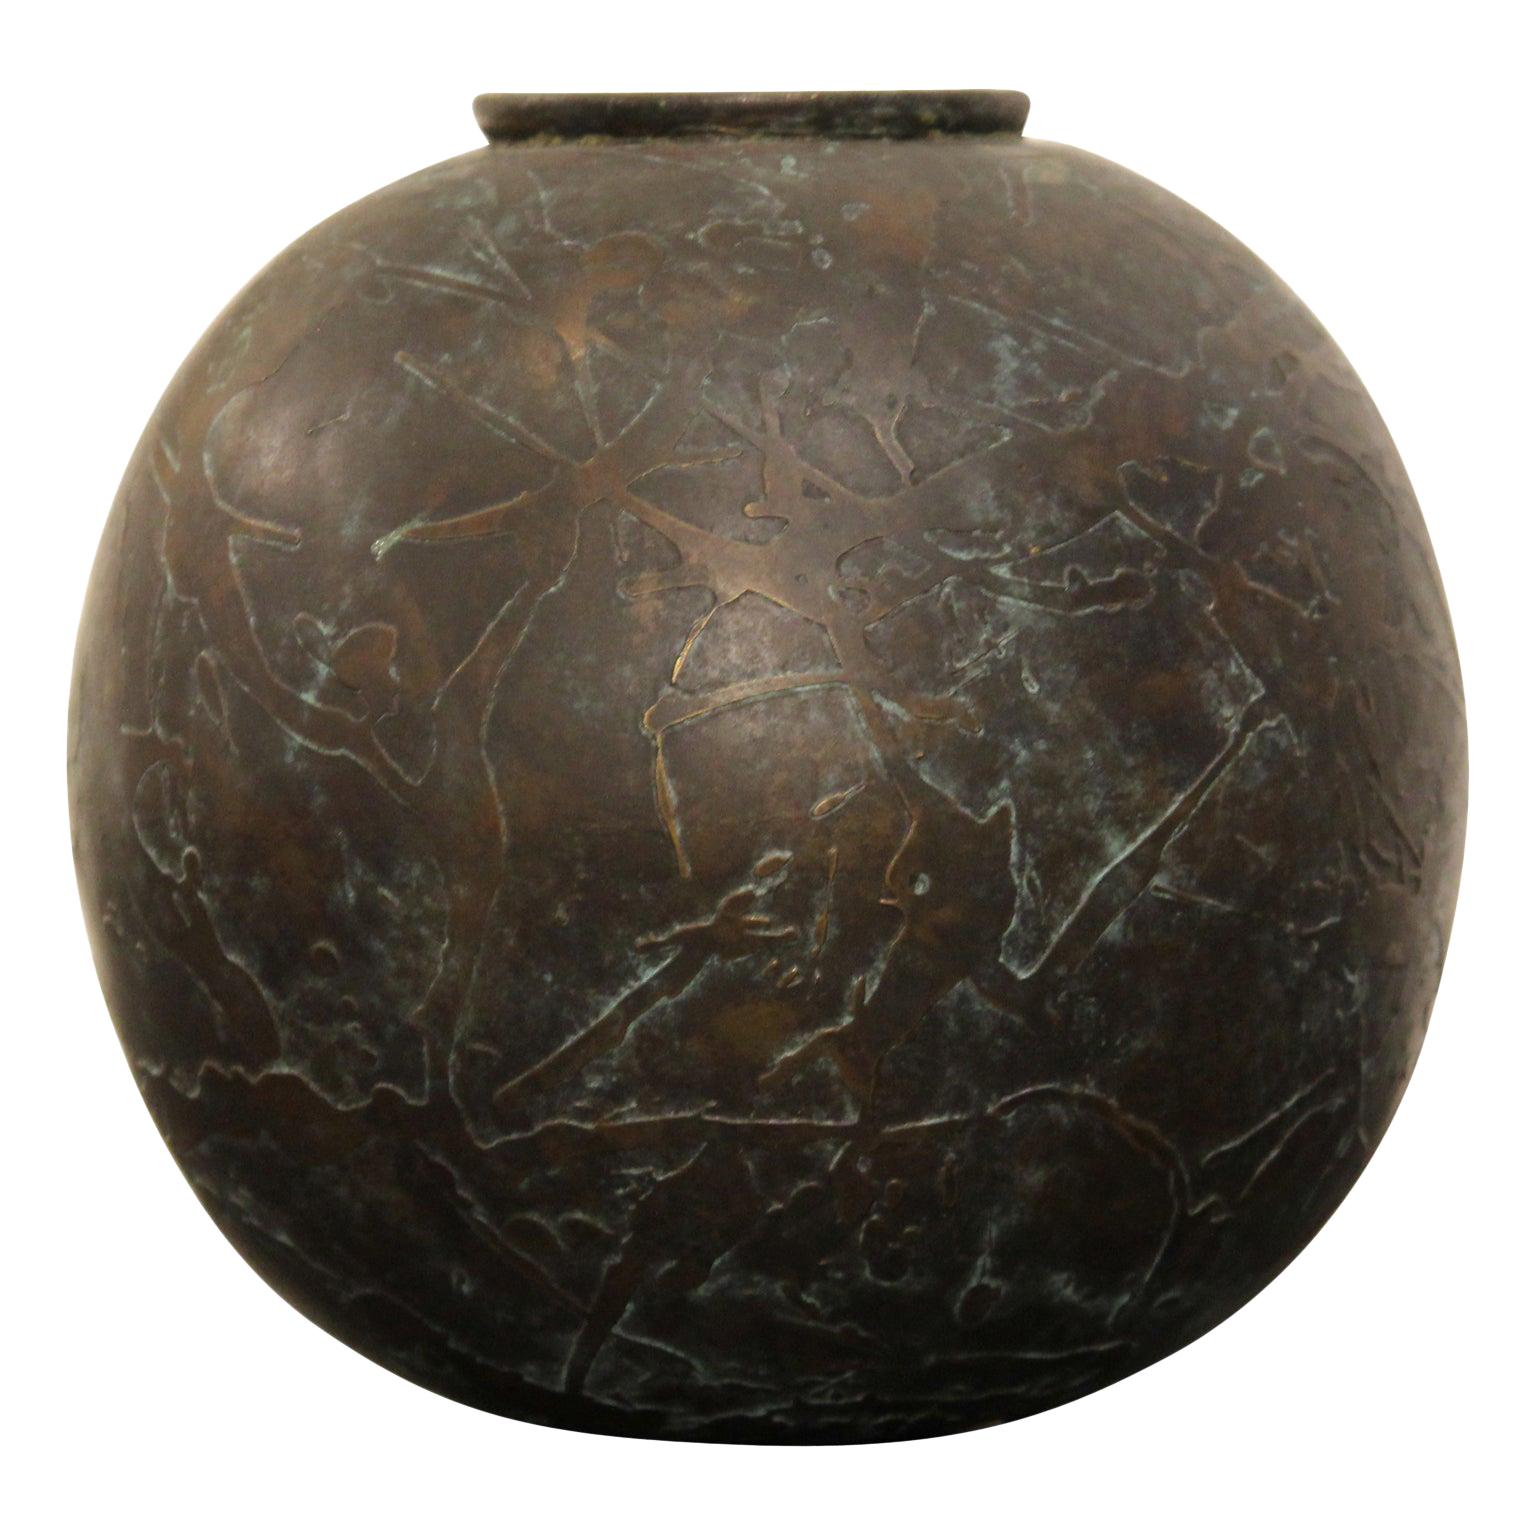 Unique Abstract Textured Bronze Circular Vase